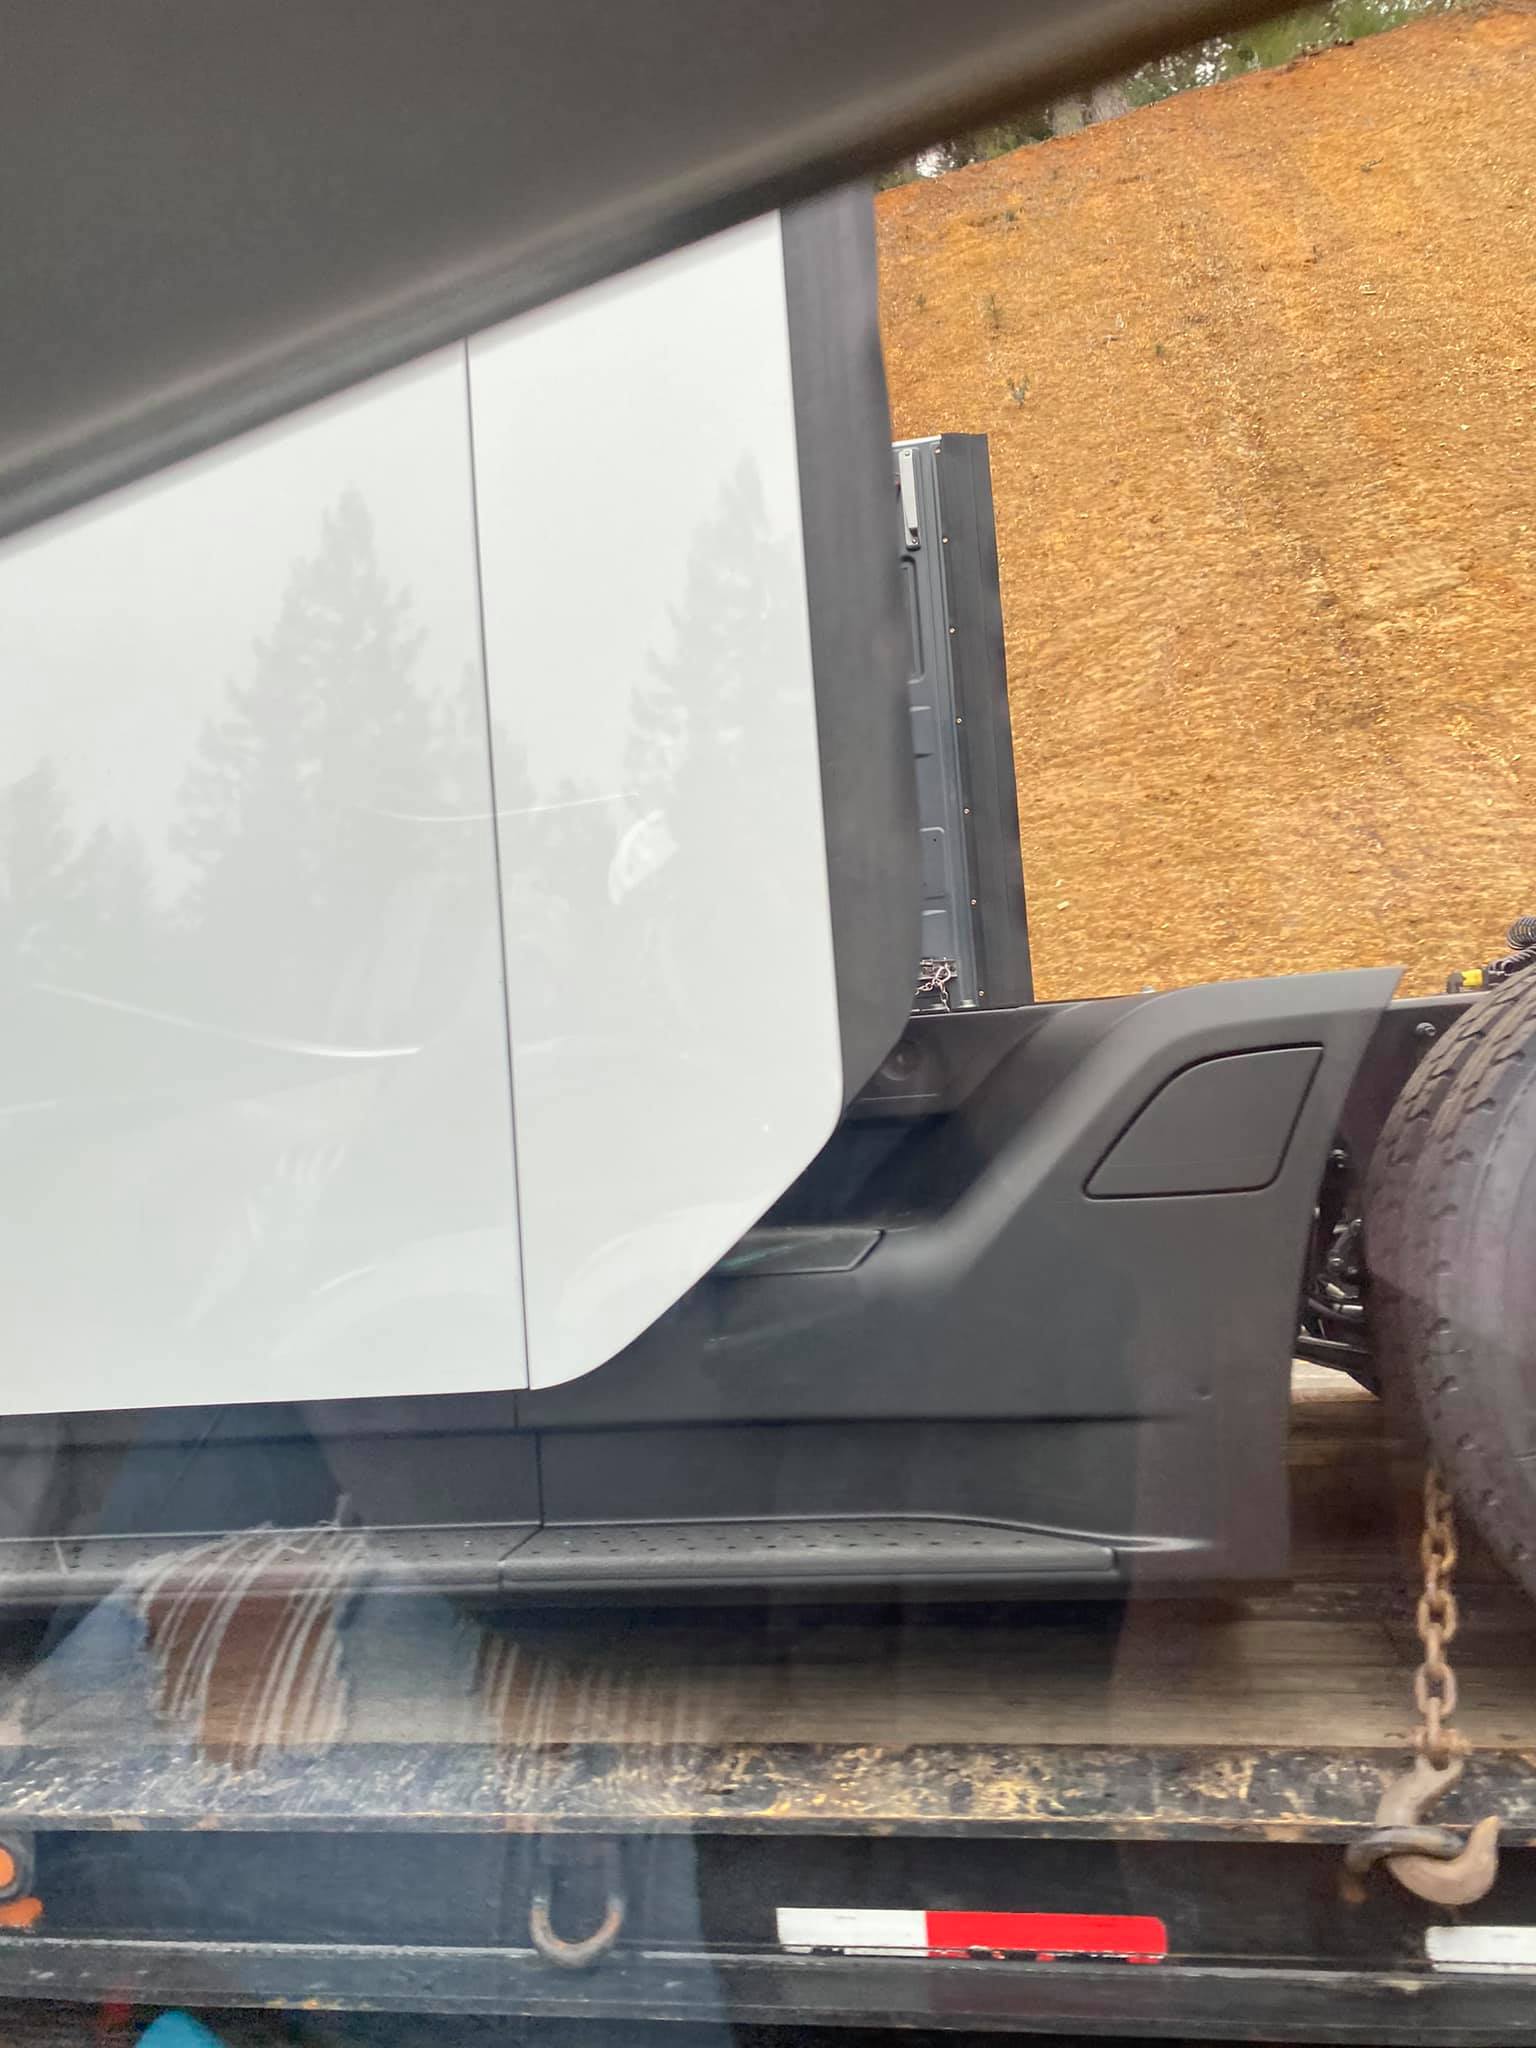 Tesla Semi spotted